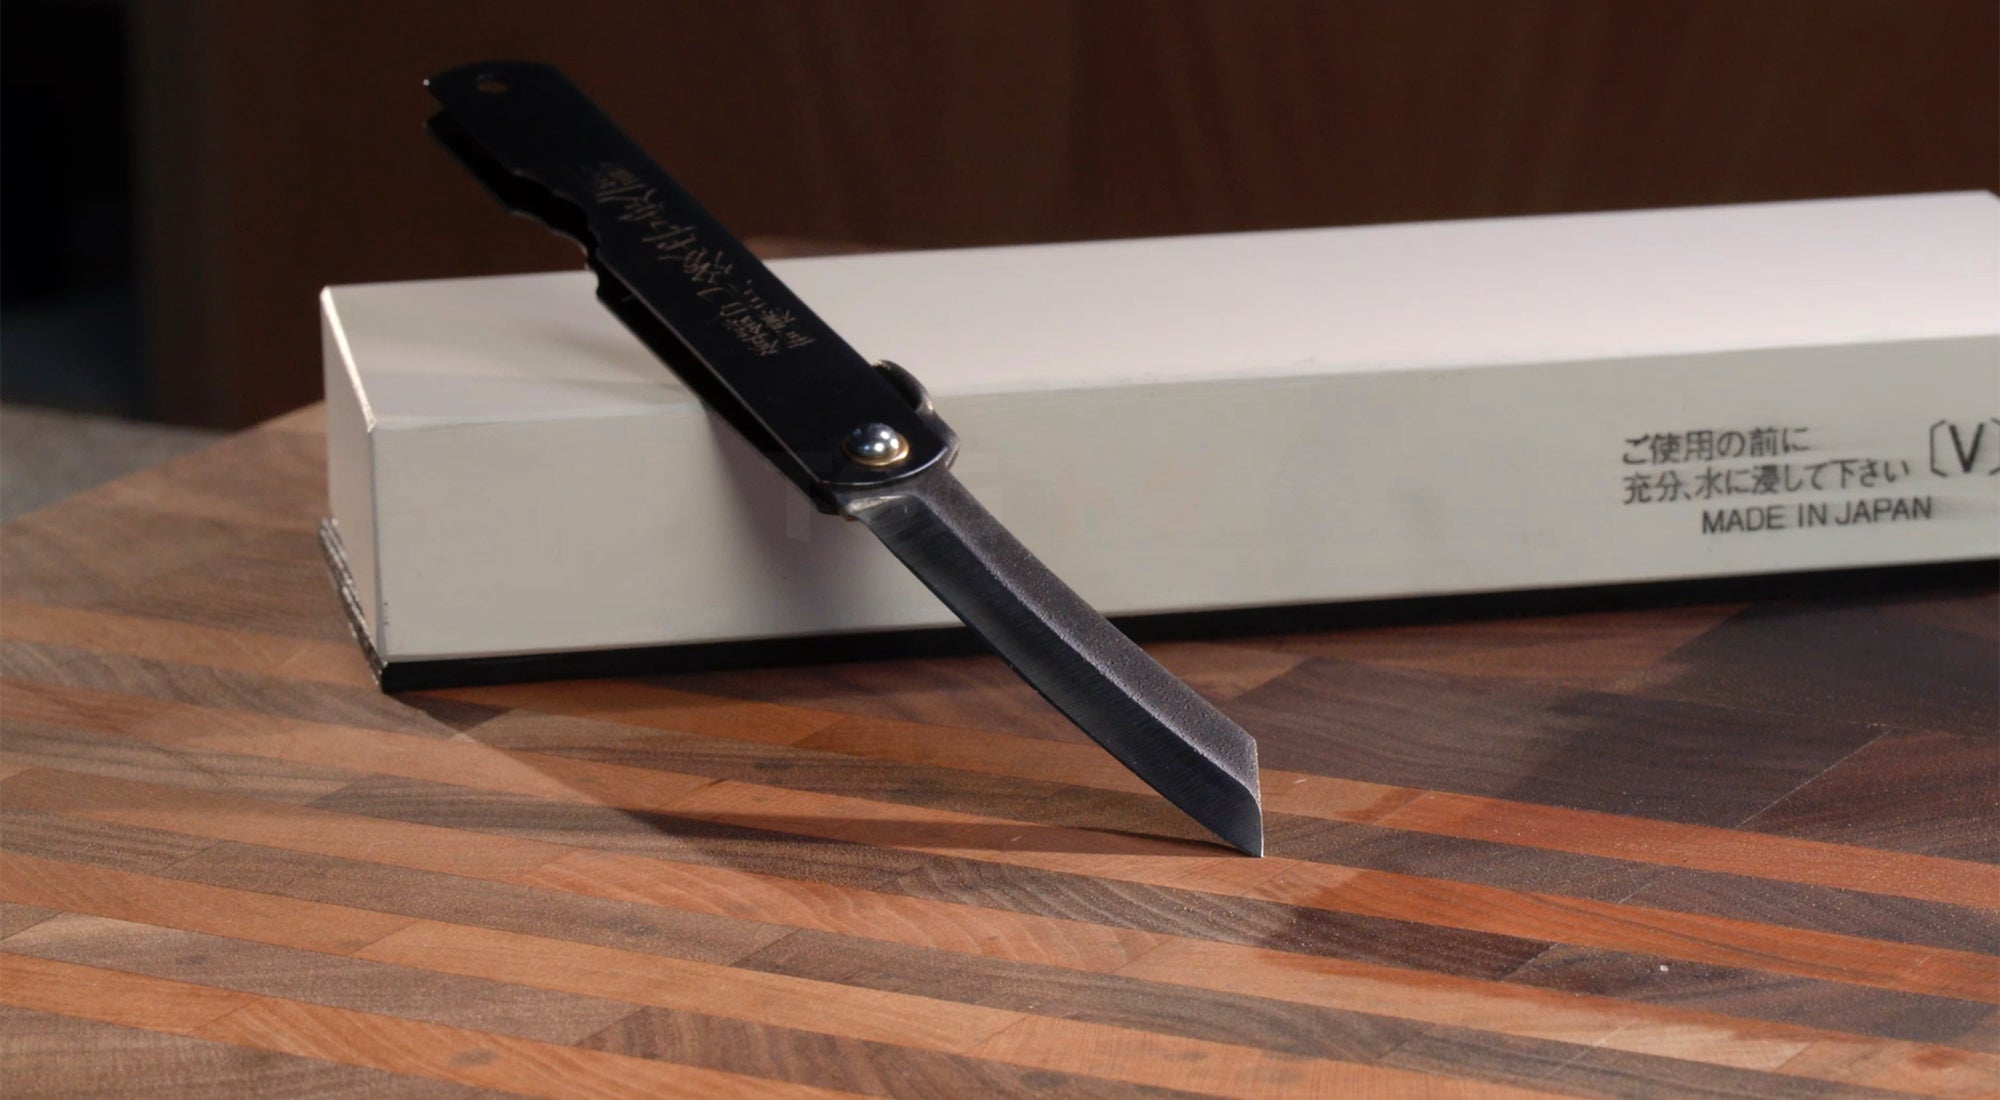 How to sharpen a Higonokami pocket knife